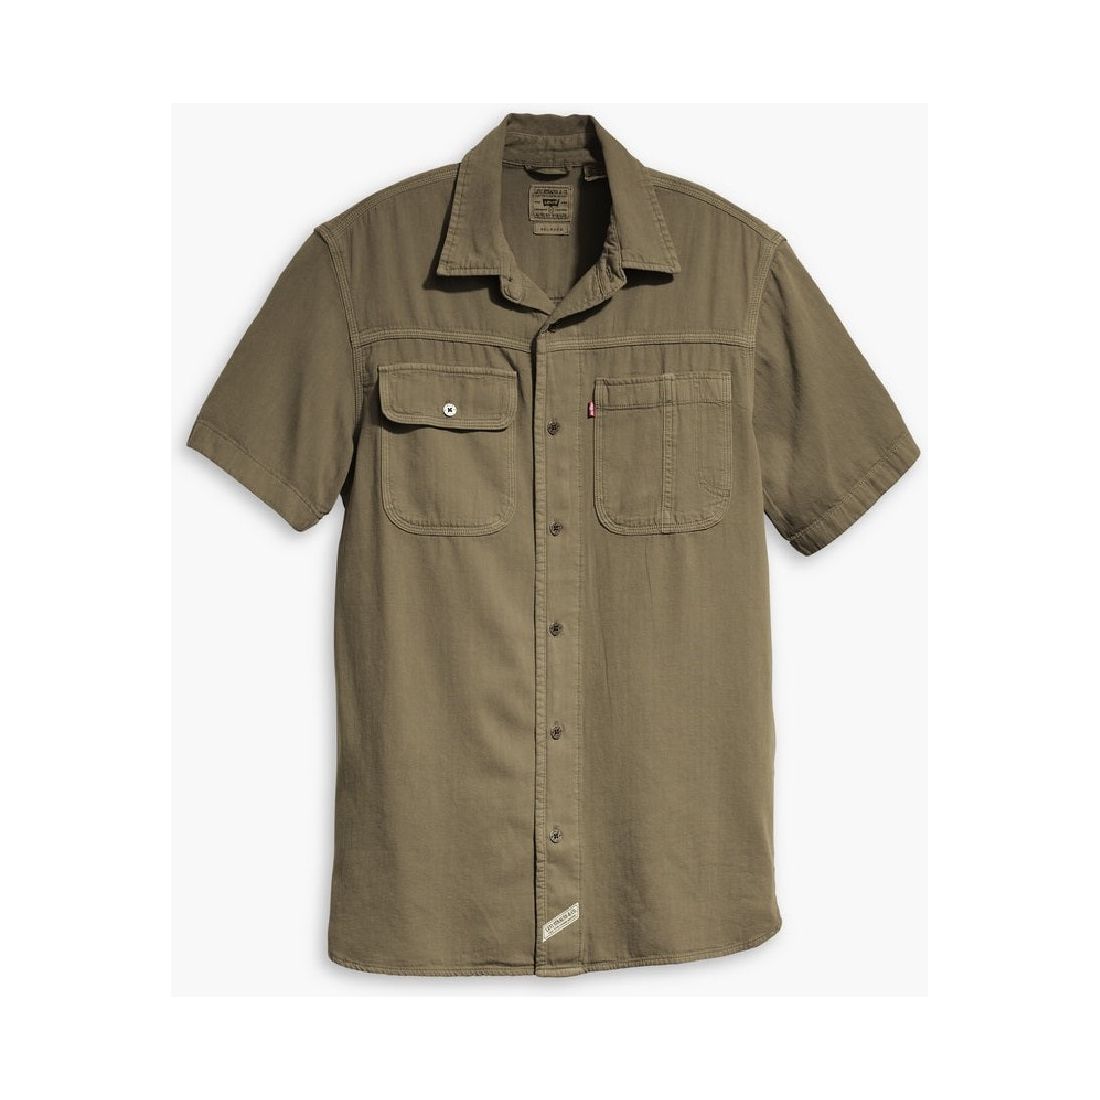 Levi's - Auburn Worker Shirt in Otter Natural